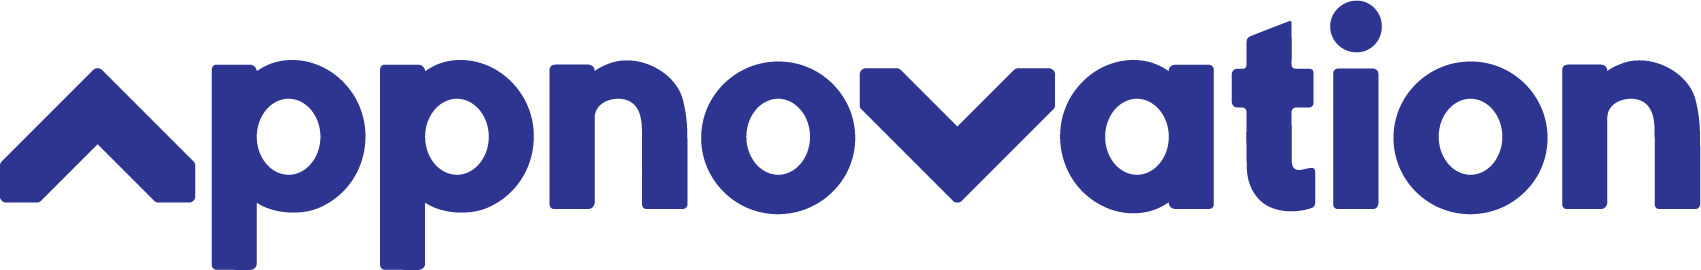 Logotipo da Appnovation